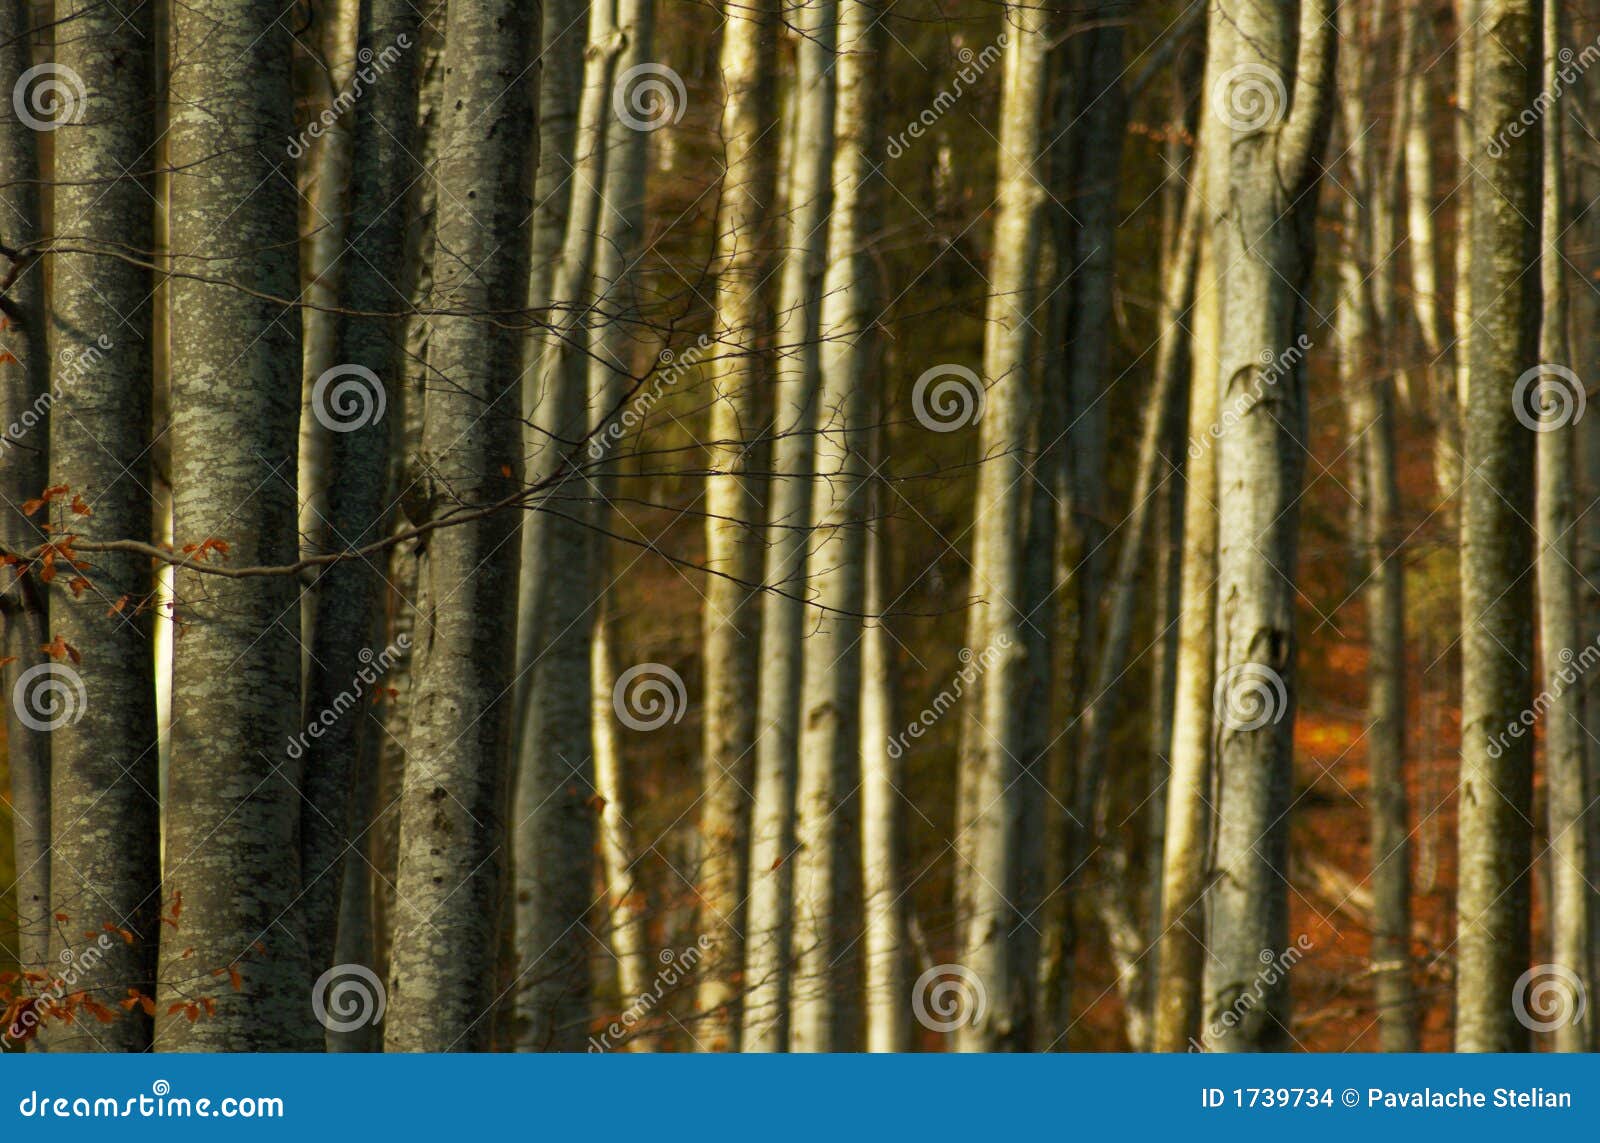 dense forest trees